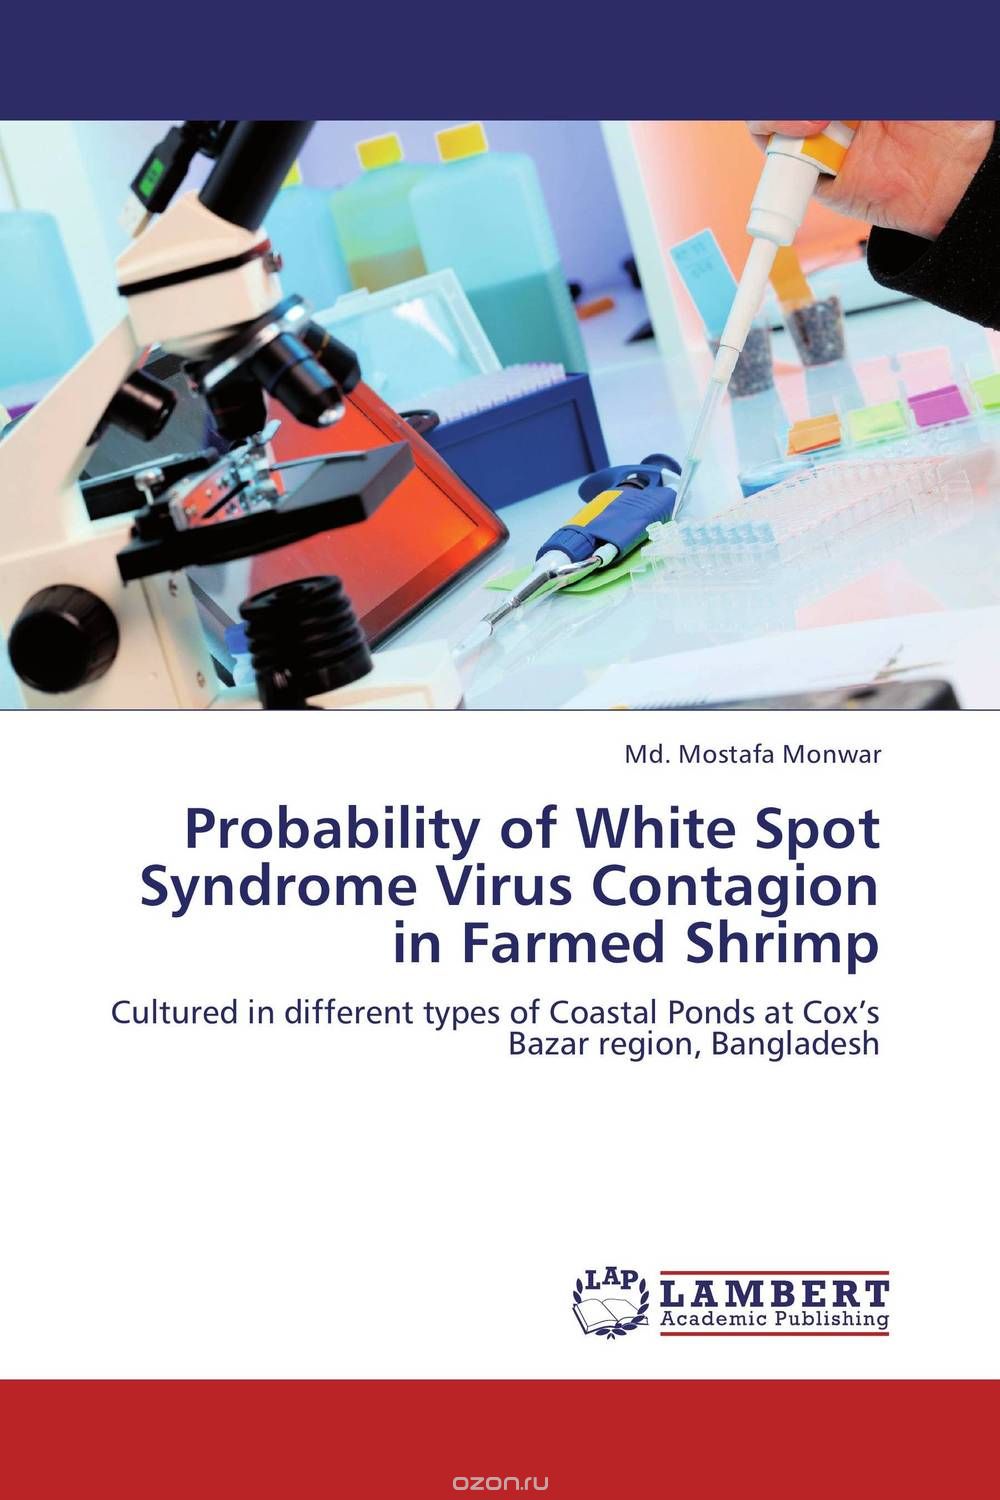 Скачать книгу "Probability of White Spot Syndrome Virus Contagion in Farmed Shrimp"